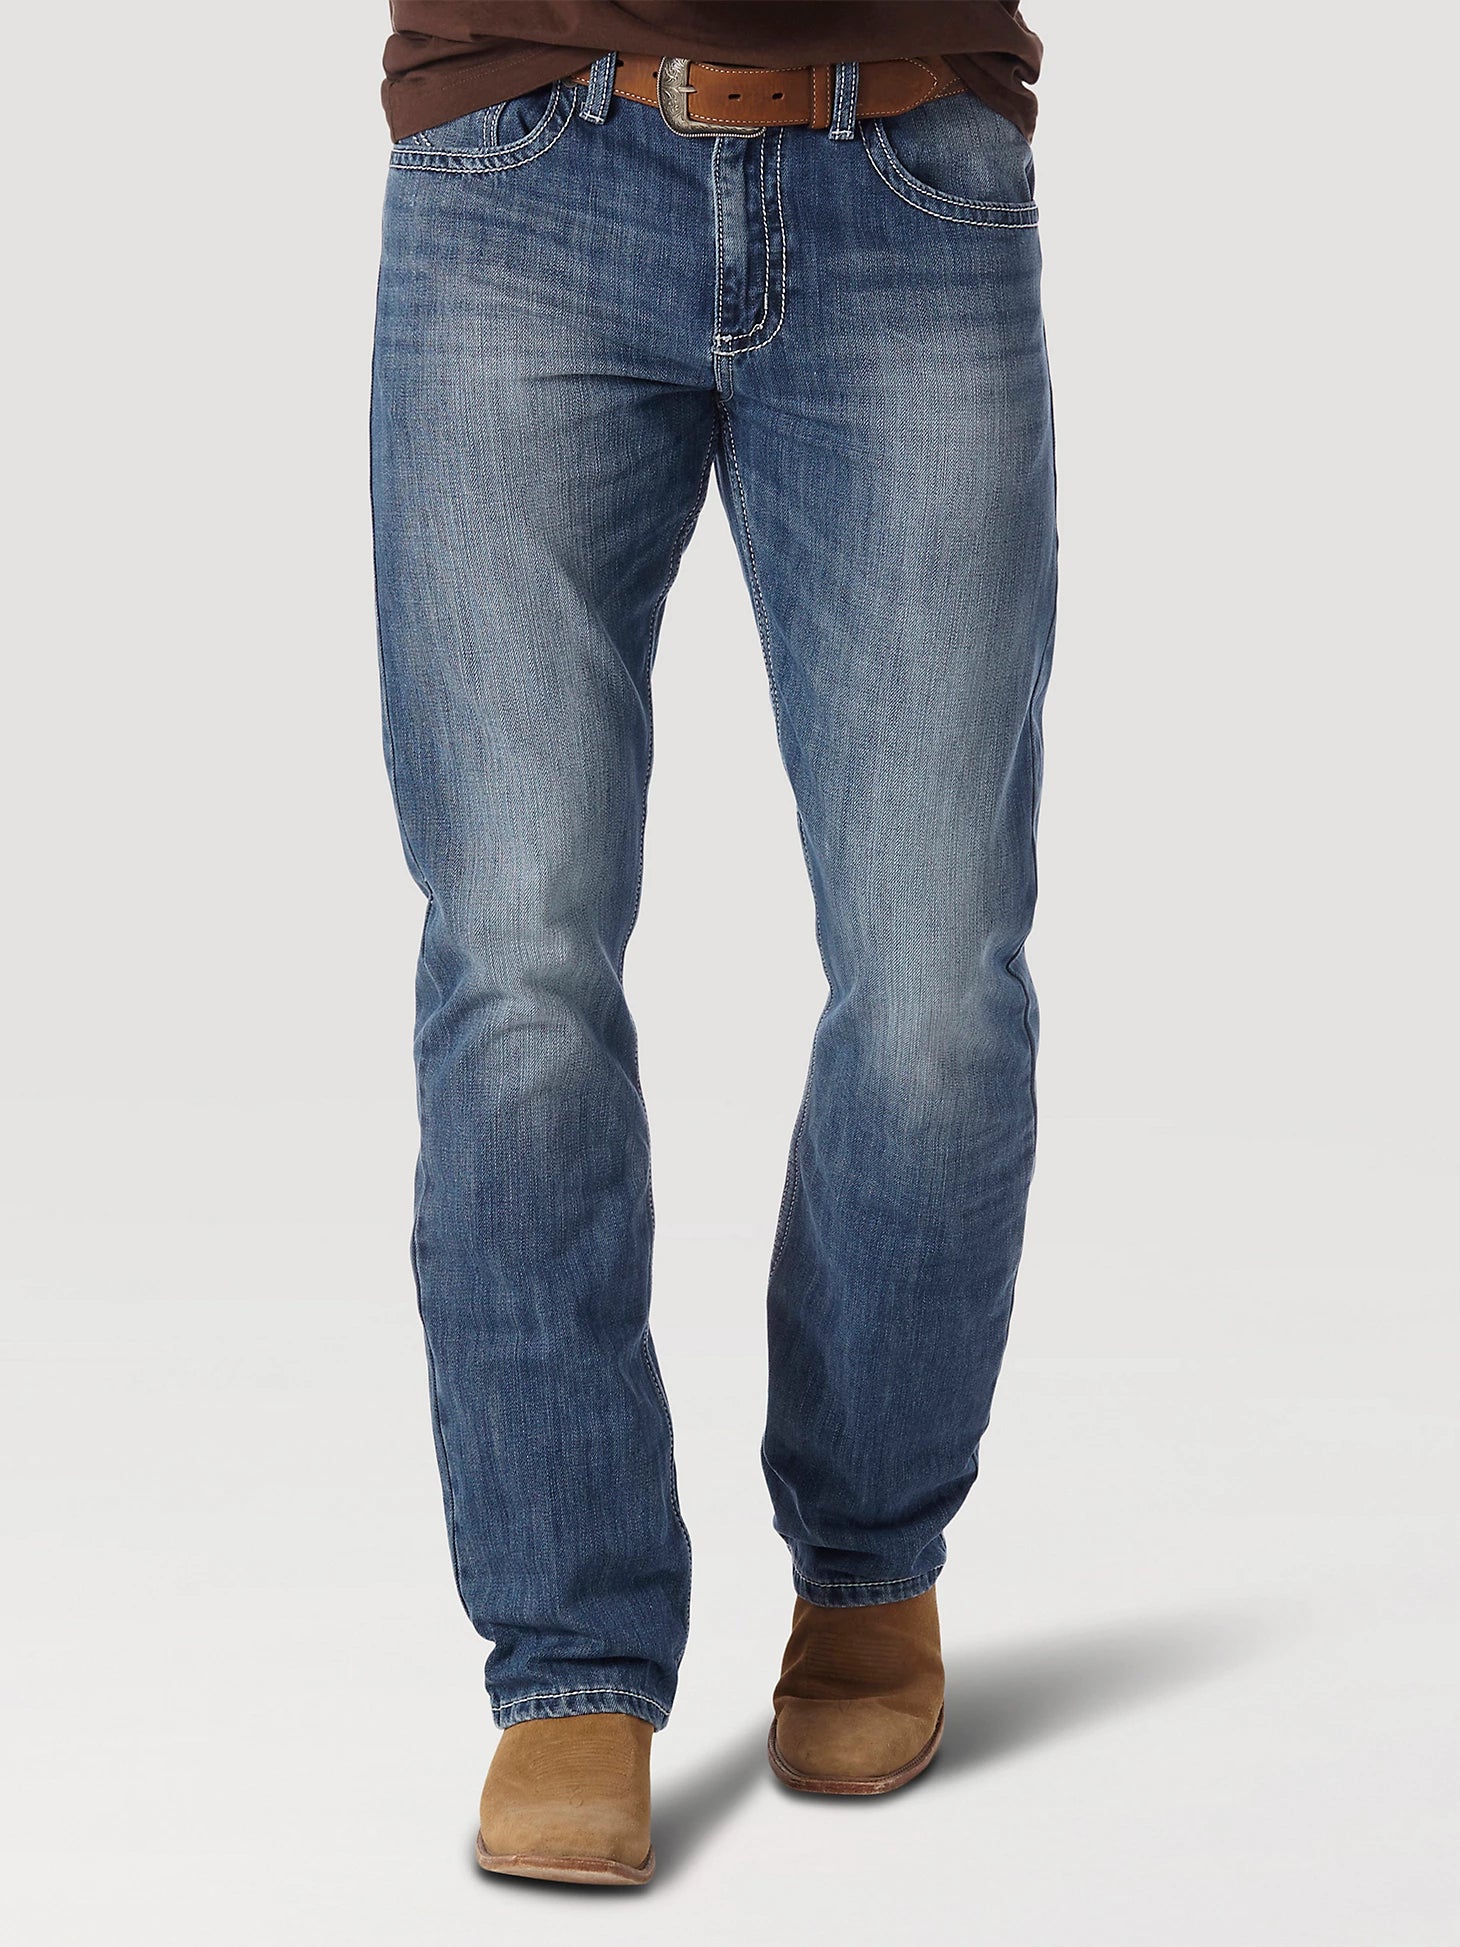 Wrangler Men's No. 42 Vintage Bootcut Jeans